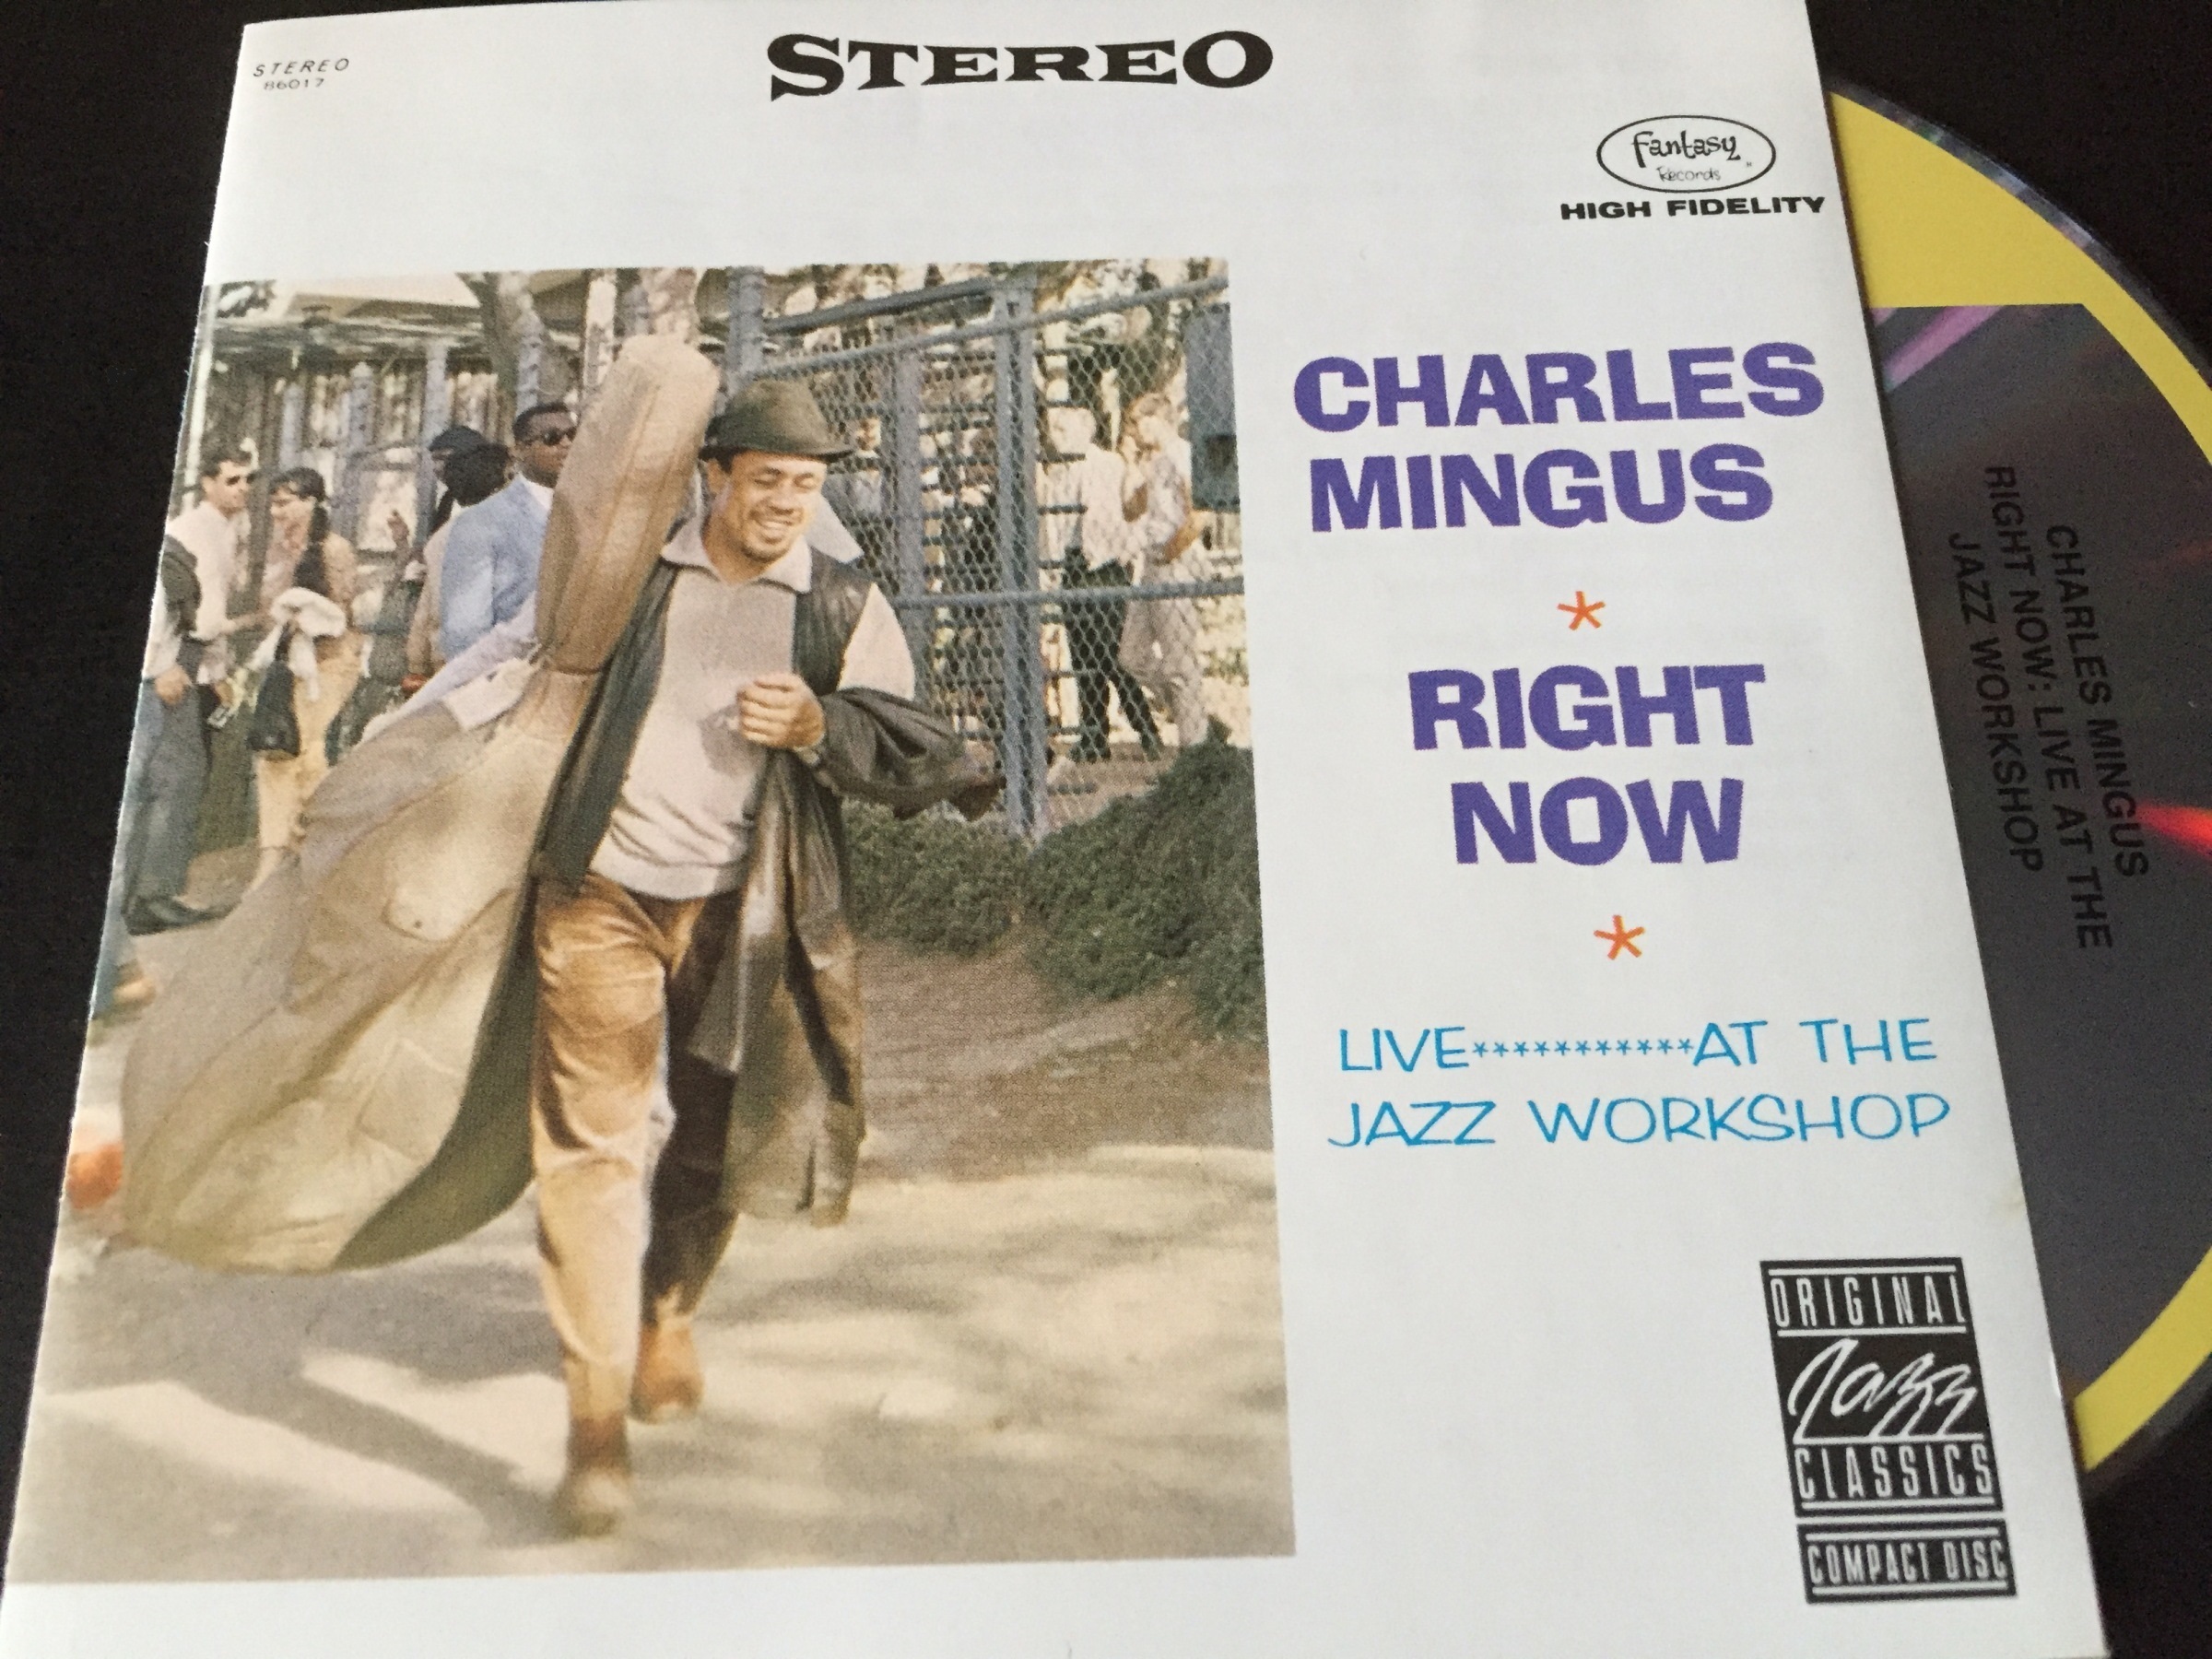 Charles Mingus Right Now: 日々JAZZ的な生活